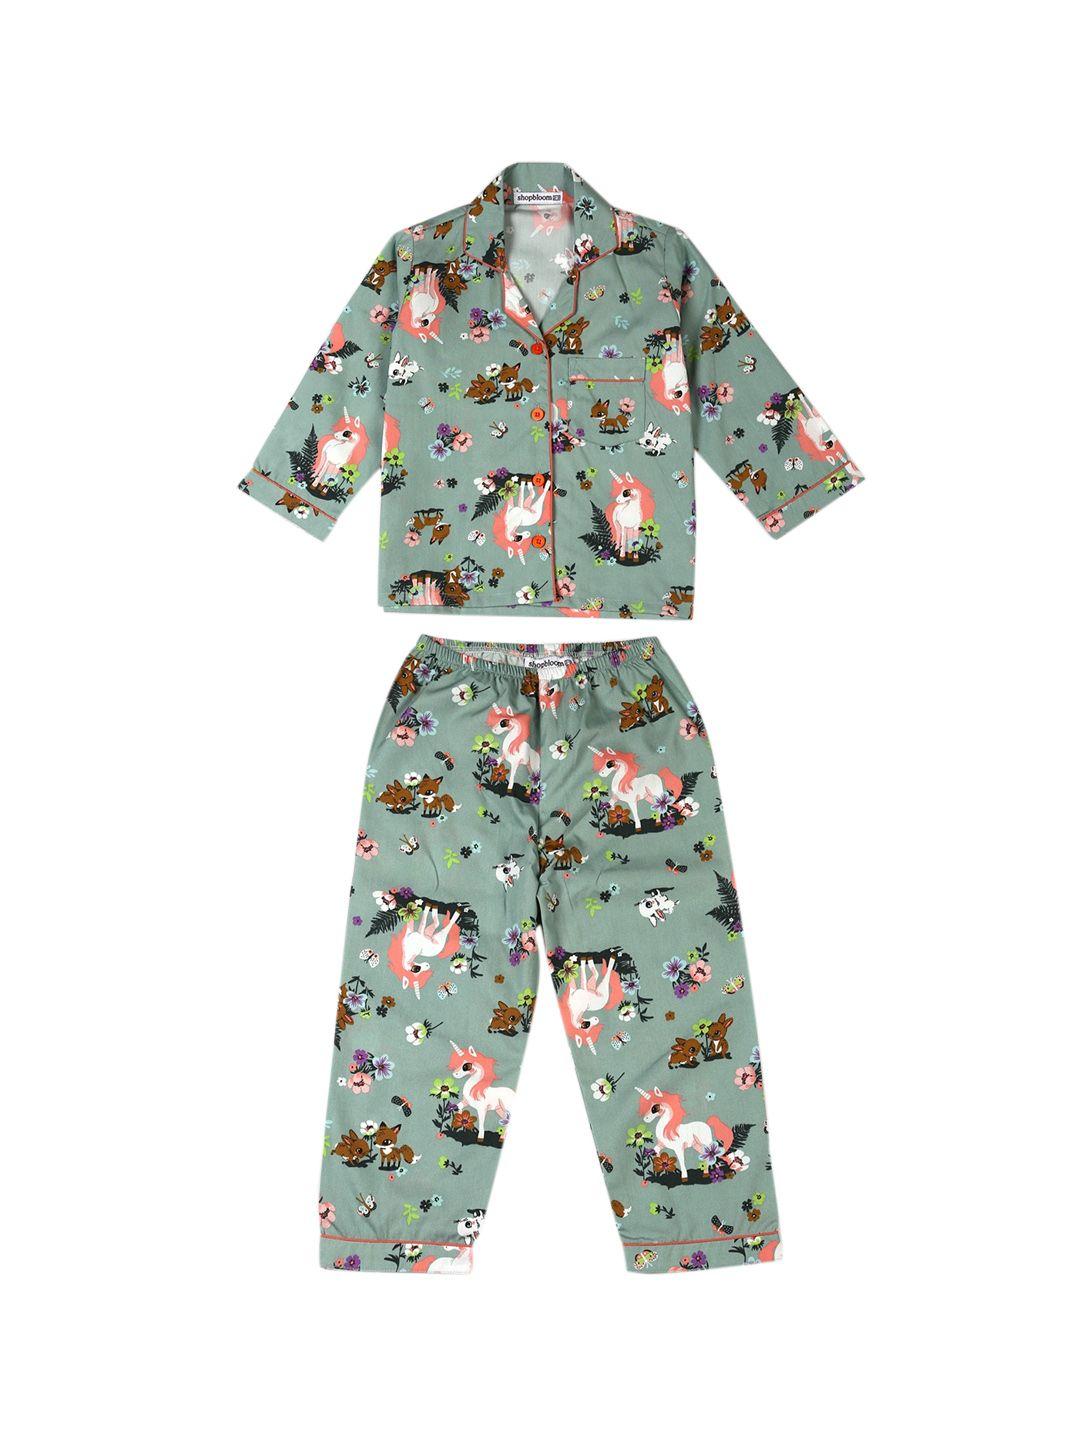 shopbloom unisex kids green & white printed night suit